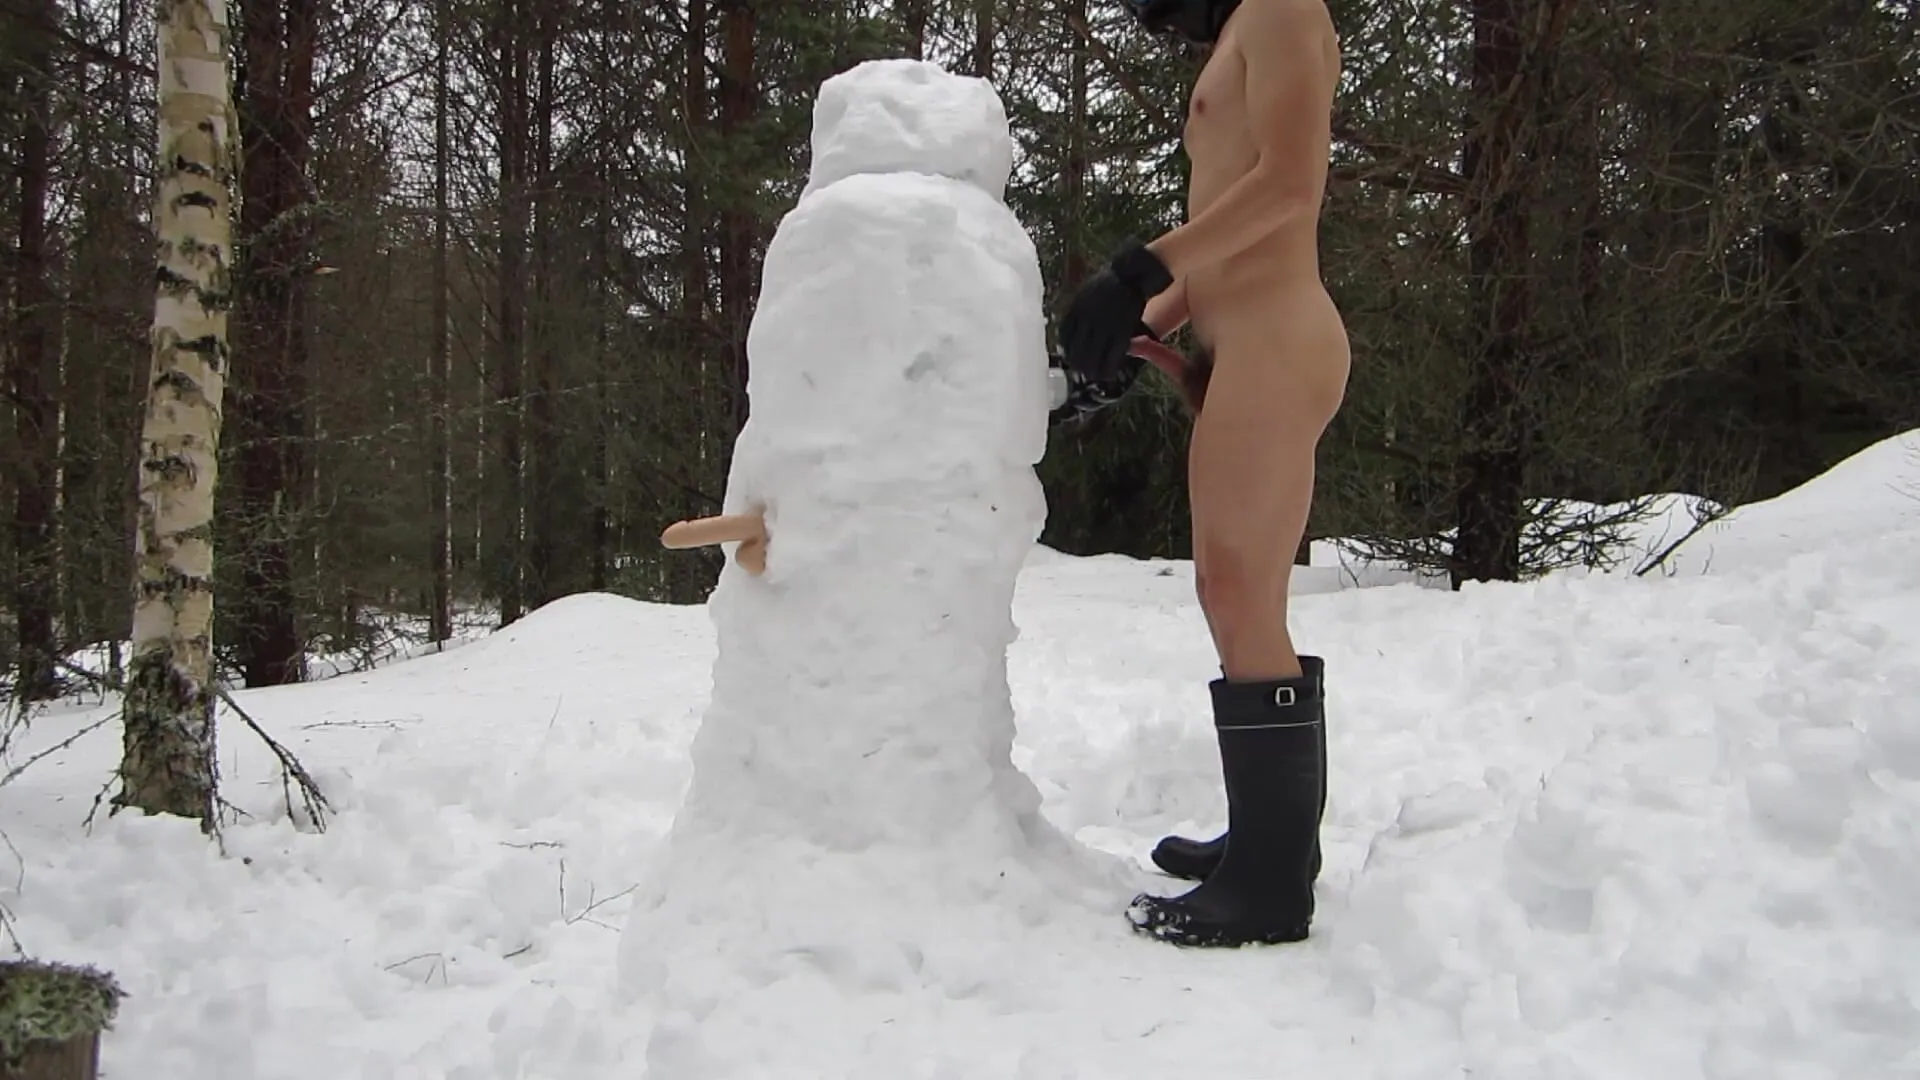 Do you wanna fuck a snowman by Persamus Faphouse